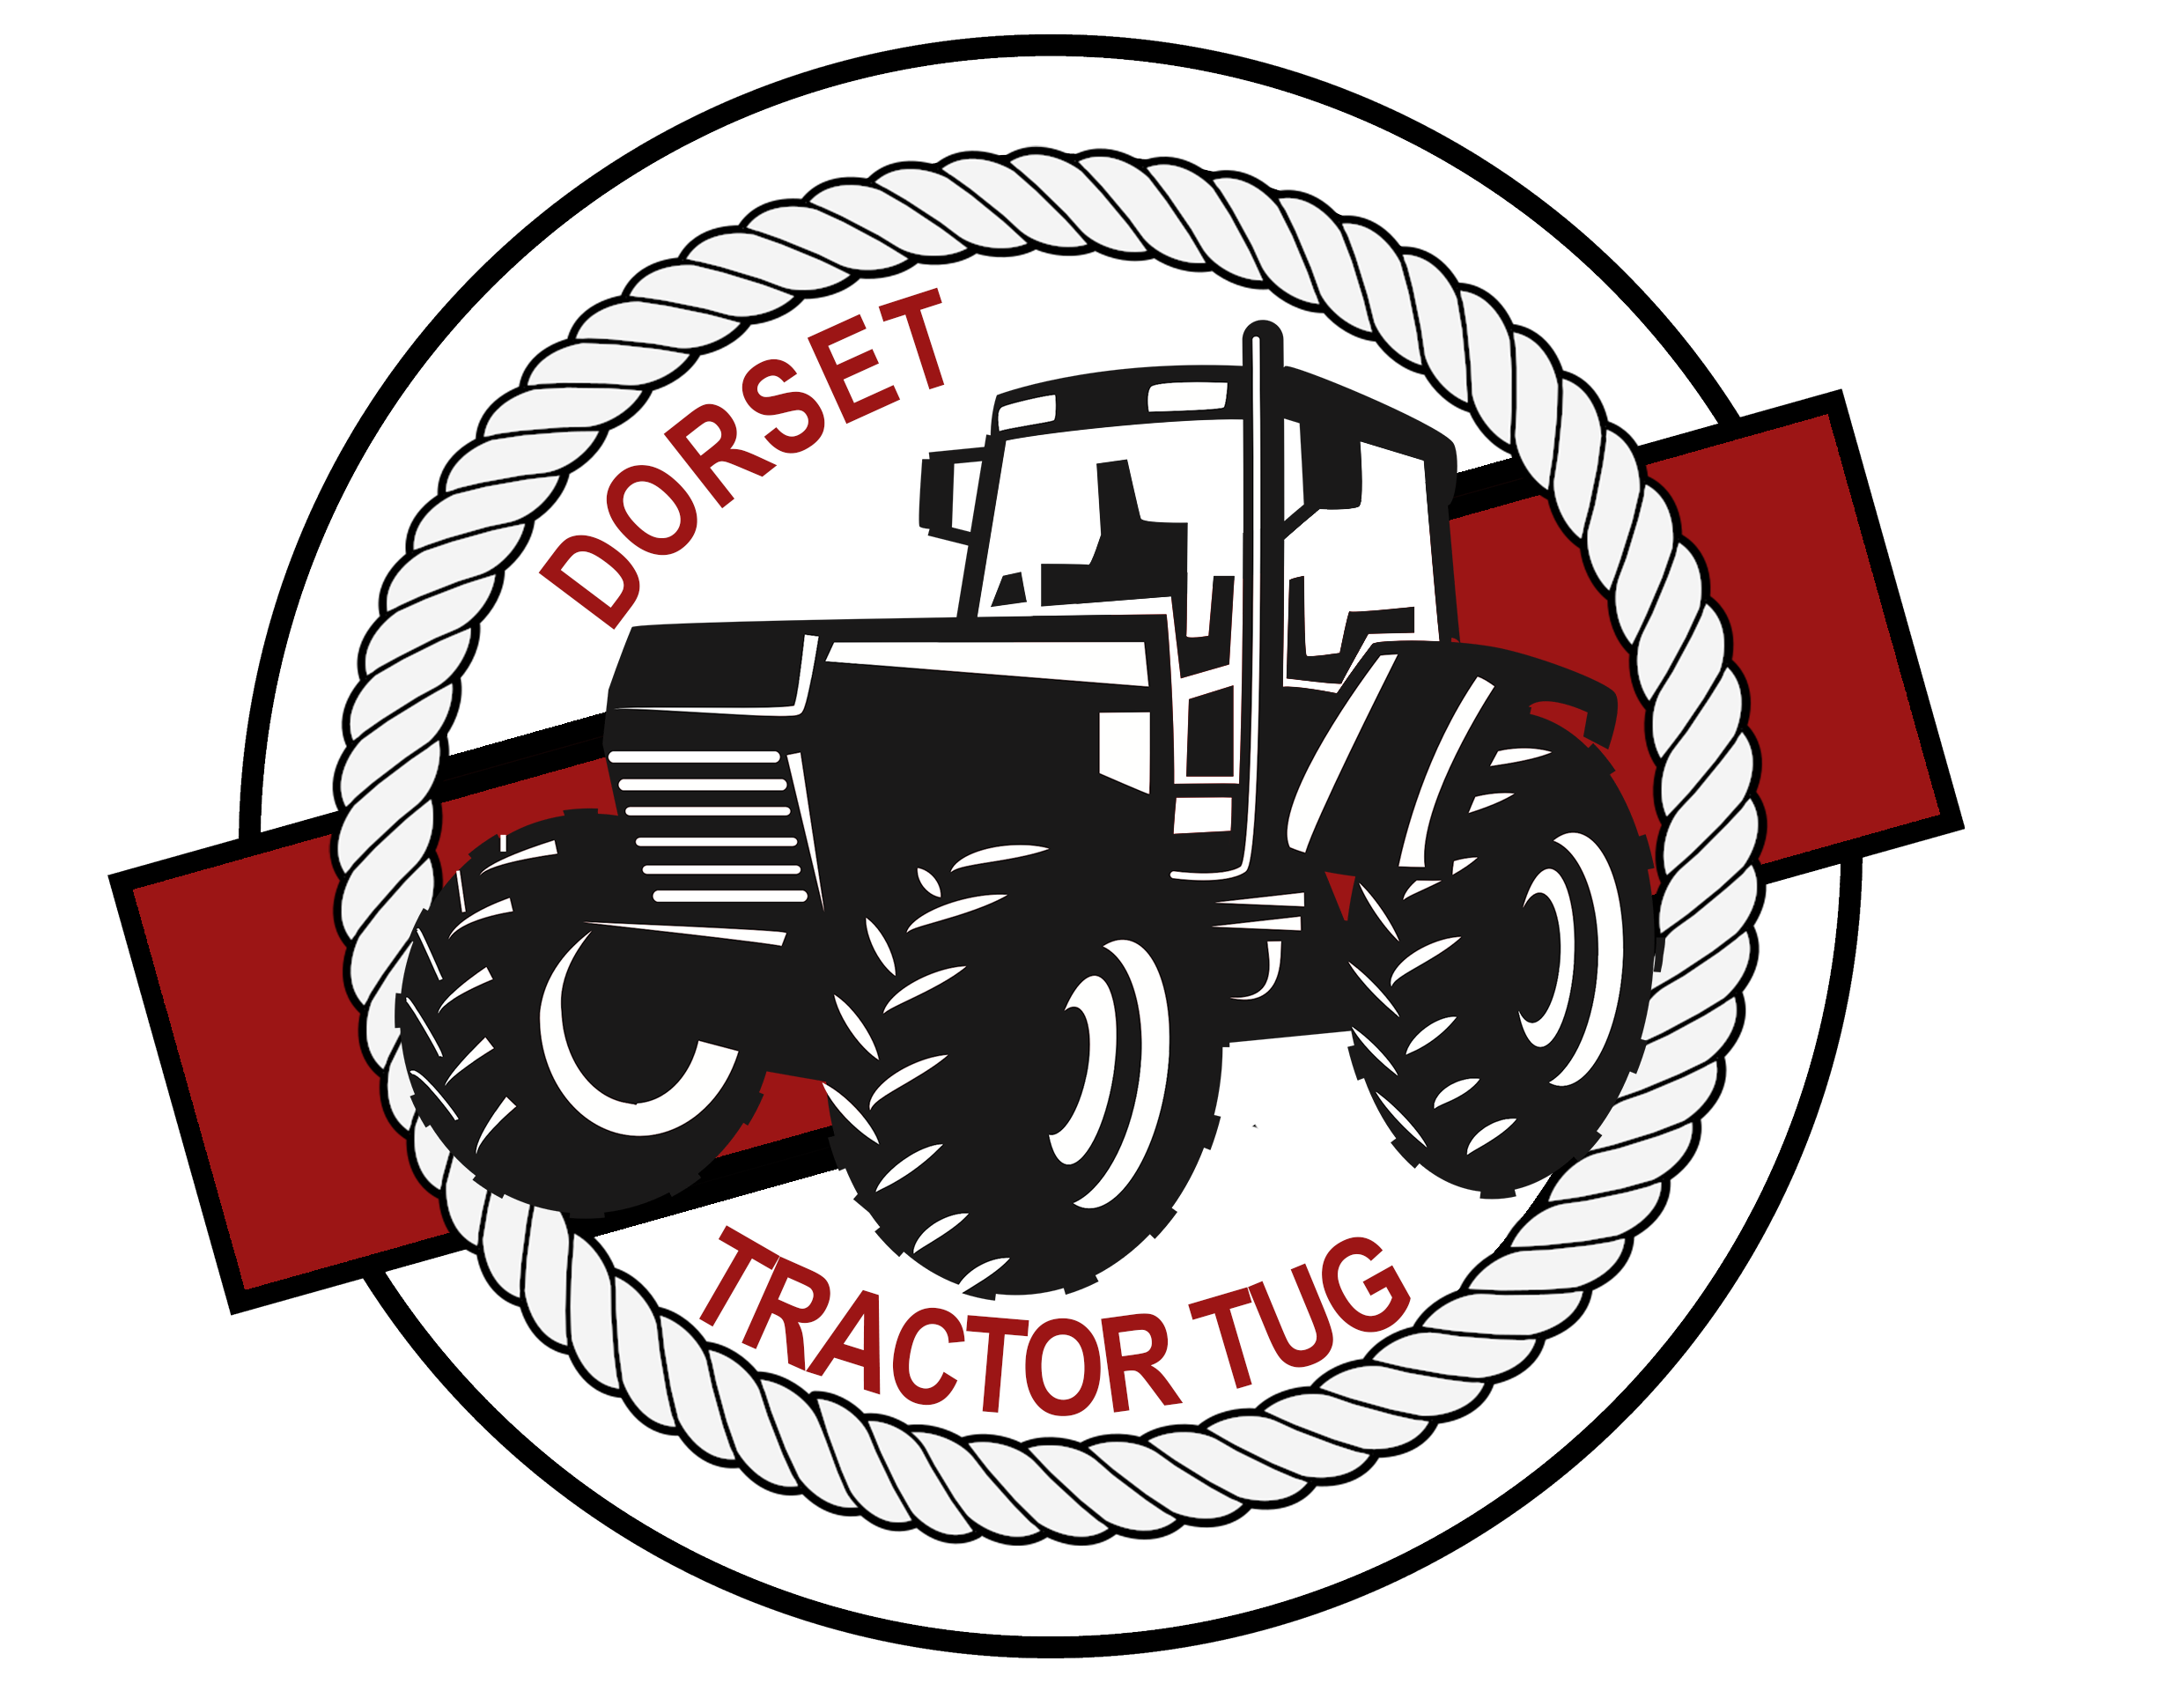 FAQs Dorset Tractor Tug